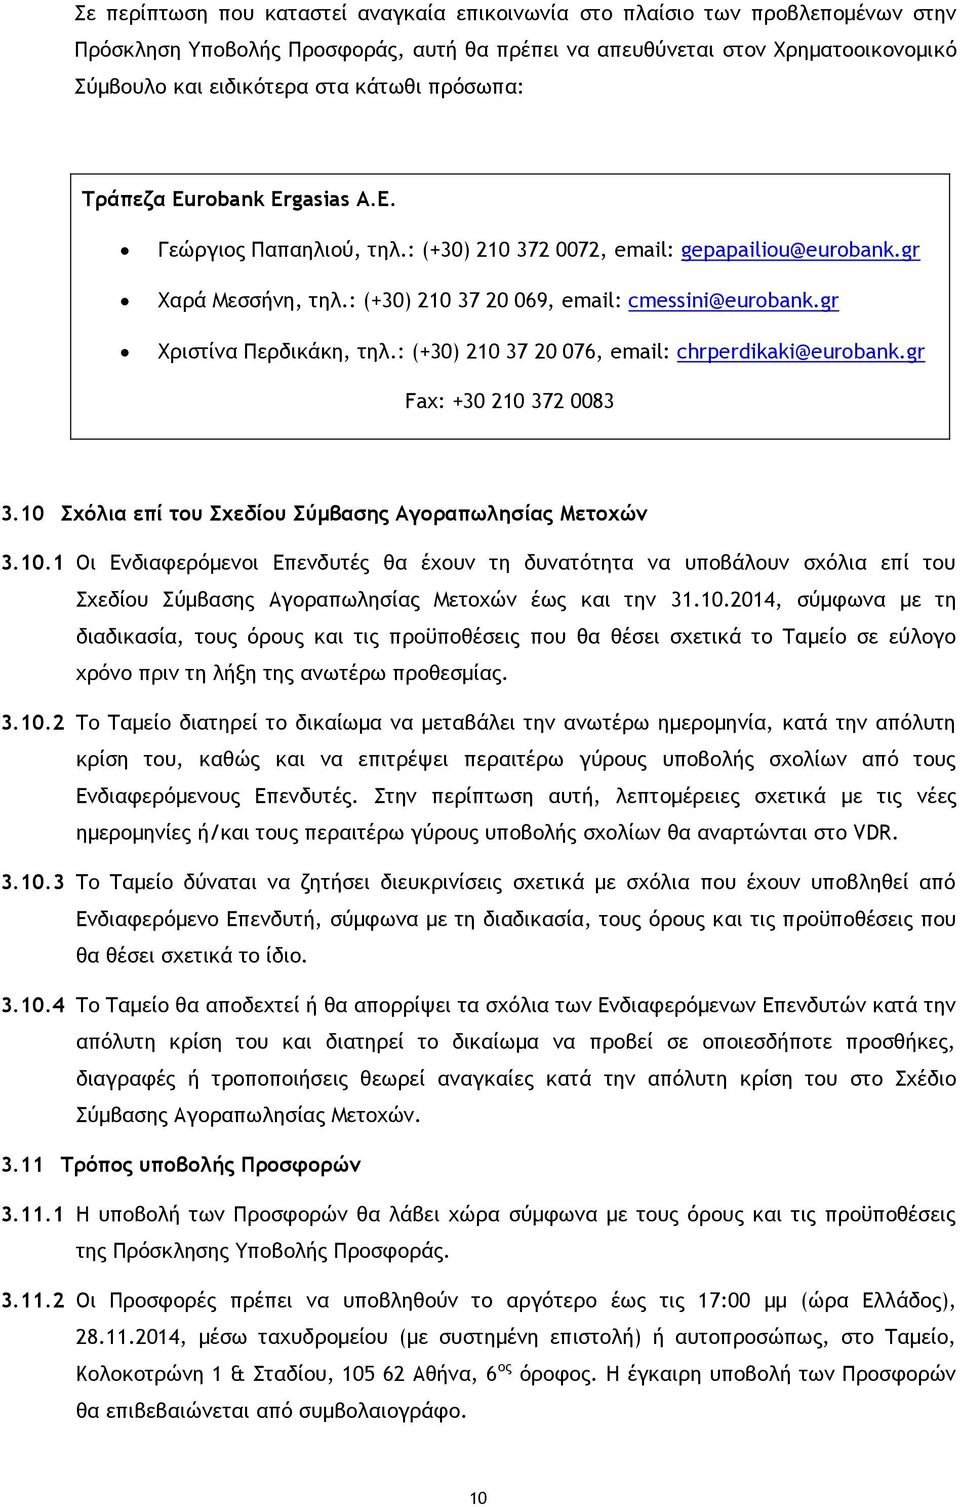 gr Χριστίνα Περδικάκη, τηλ.: (+30) 210 37 20 076, email: chrperdikaki@eurobank.gr Fax: +30 210 372 0083 3.10 Σχόλια επί του Σχεδίου Σύμβασης Αγοραπωλησίας Μετοχών 3.10.1 Οι Ενδιαφερόμενοι Επενδυτές θα έχουν τη δυνατότητα να υποβάλουν σχόλια επί του Σχεδίου Σύμβασης Αγοραπωλησίας Μετοχών έως και την 31.